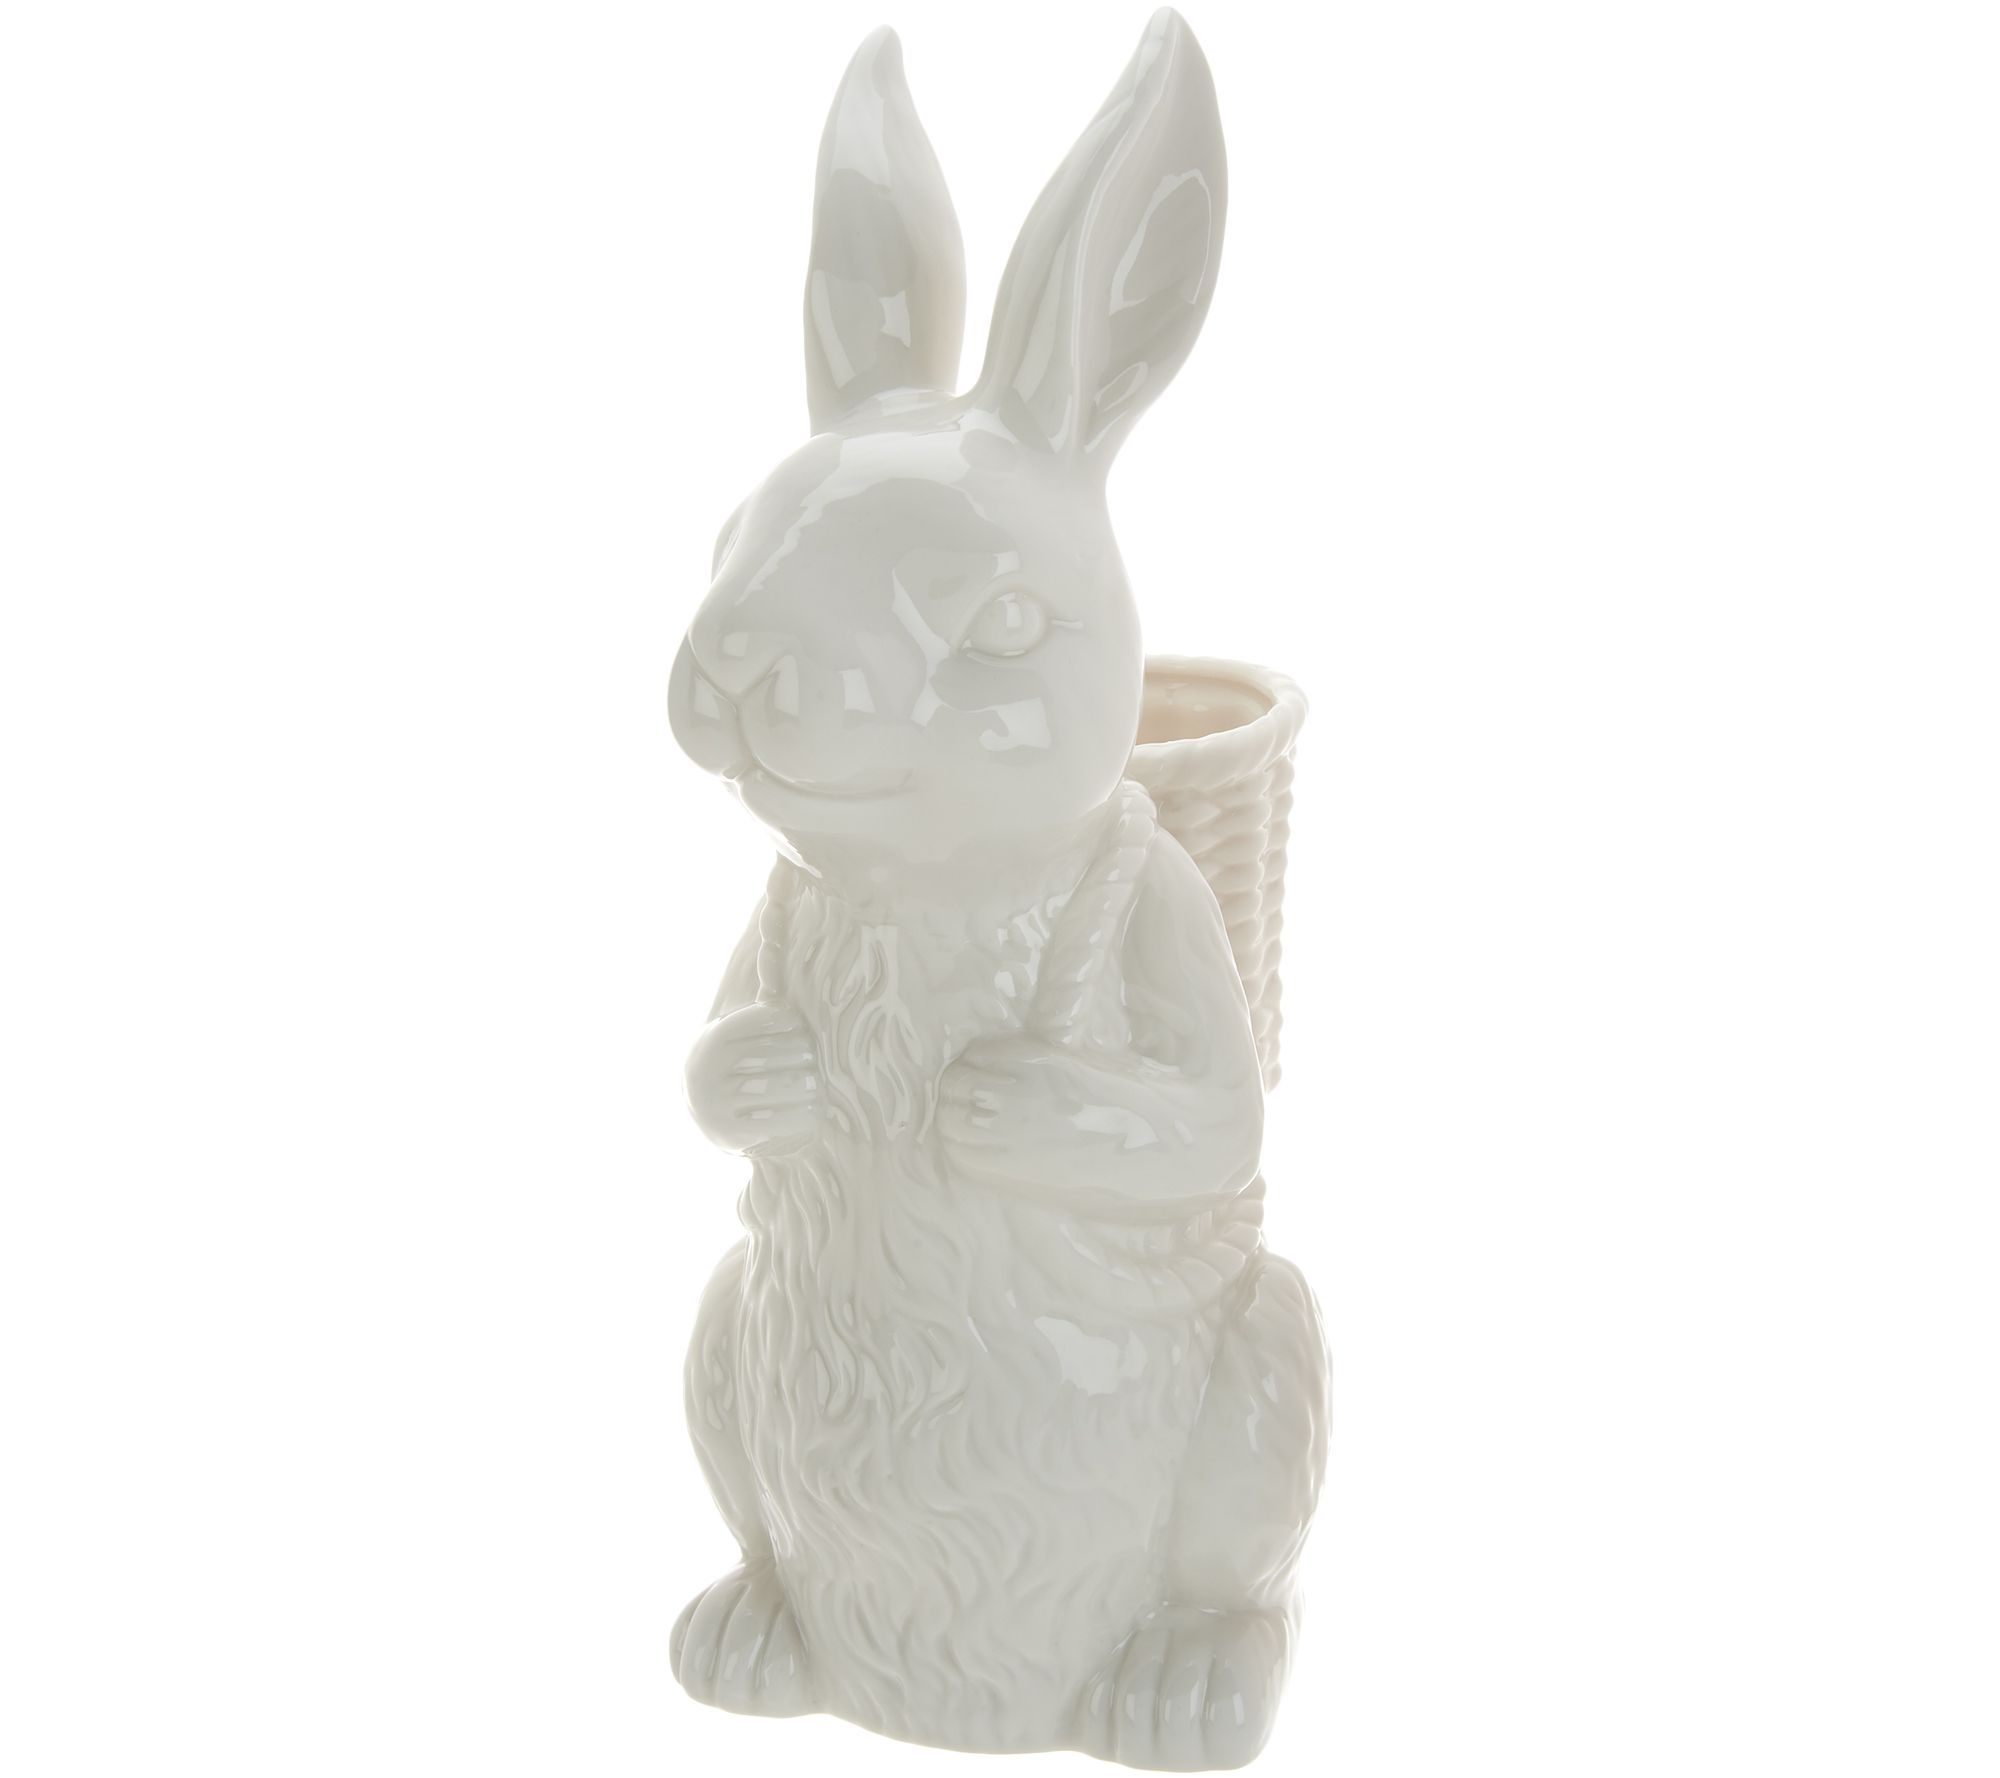 BEDFORD: Bunny Figurine with Planter Basket